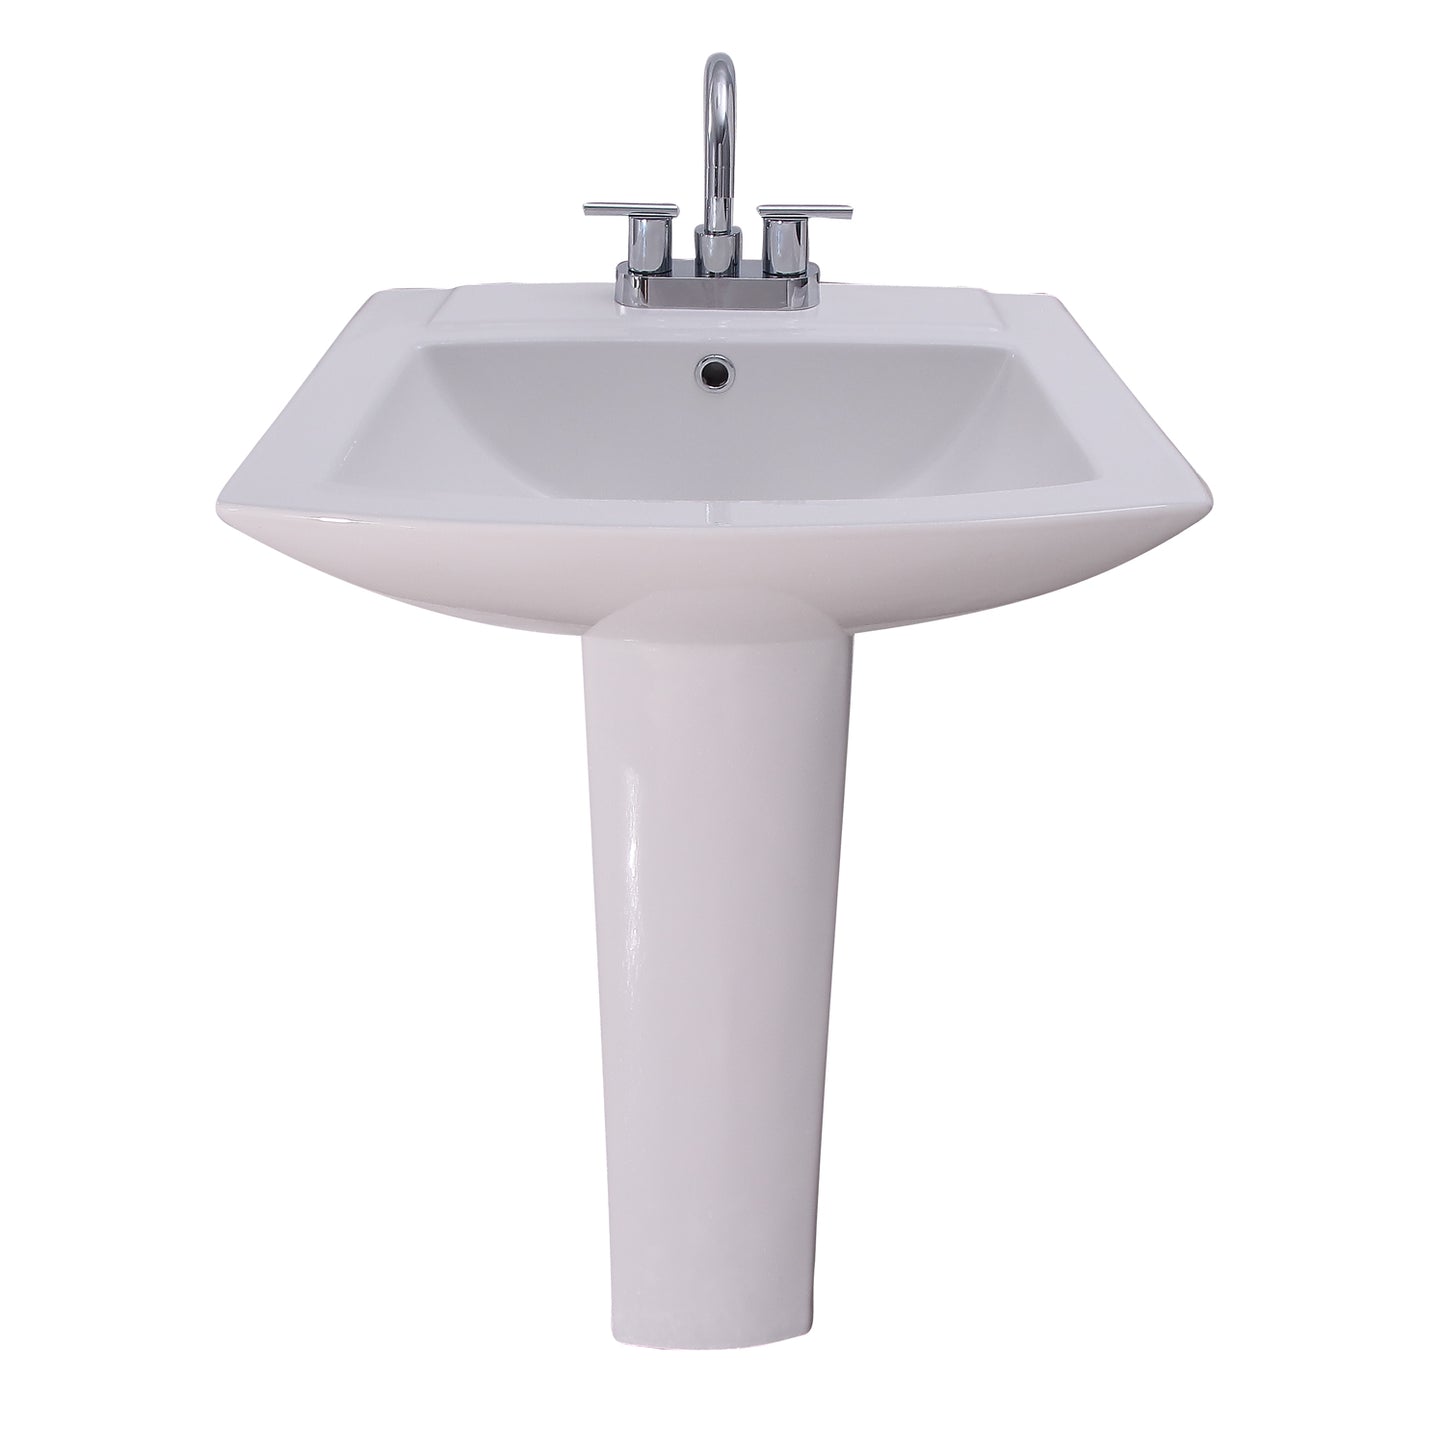 Burke Pedestal Bathroom Sink White for 1-Hole Faucet